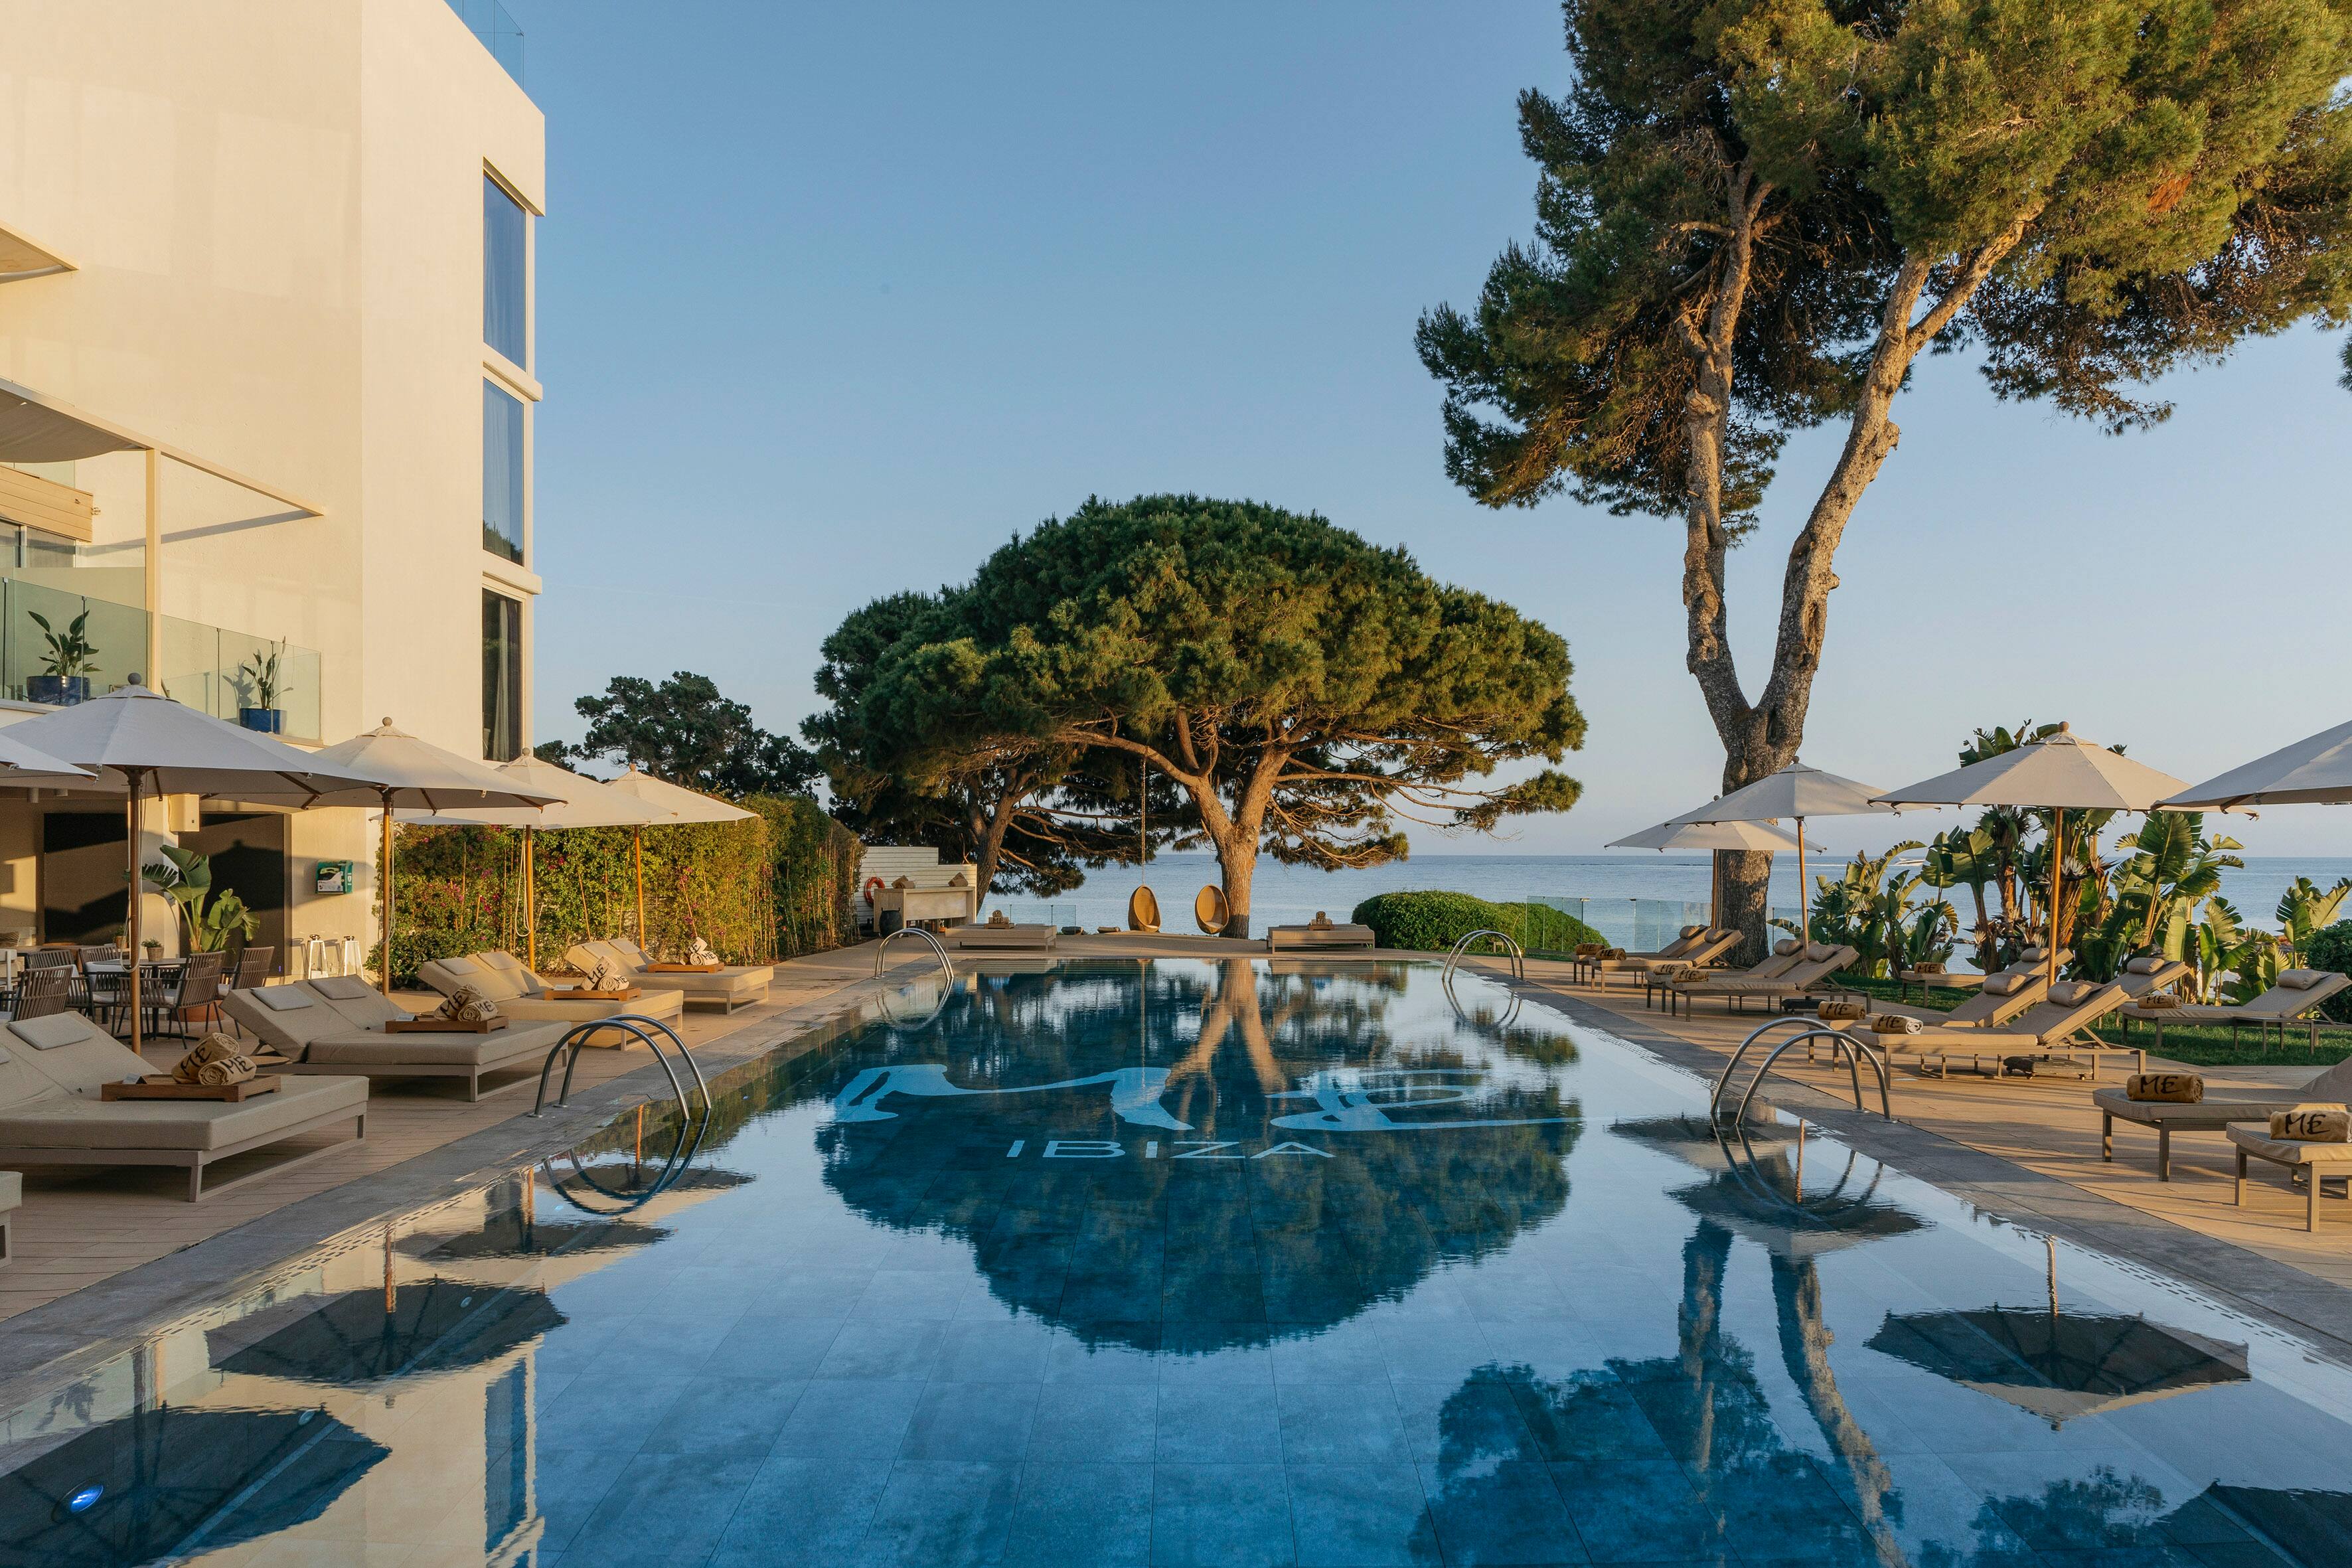 Hotel ME Ibiza, lifestyle hotel in Santa Eulalia, Ibiza